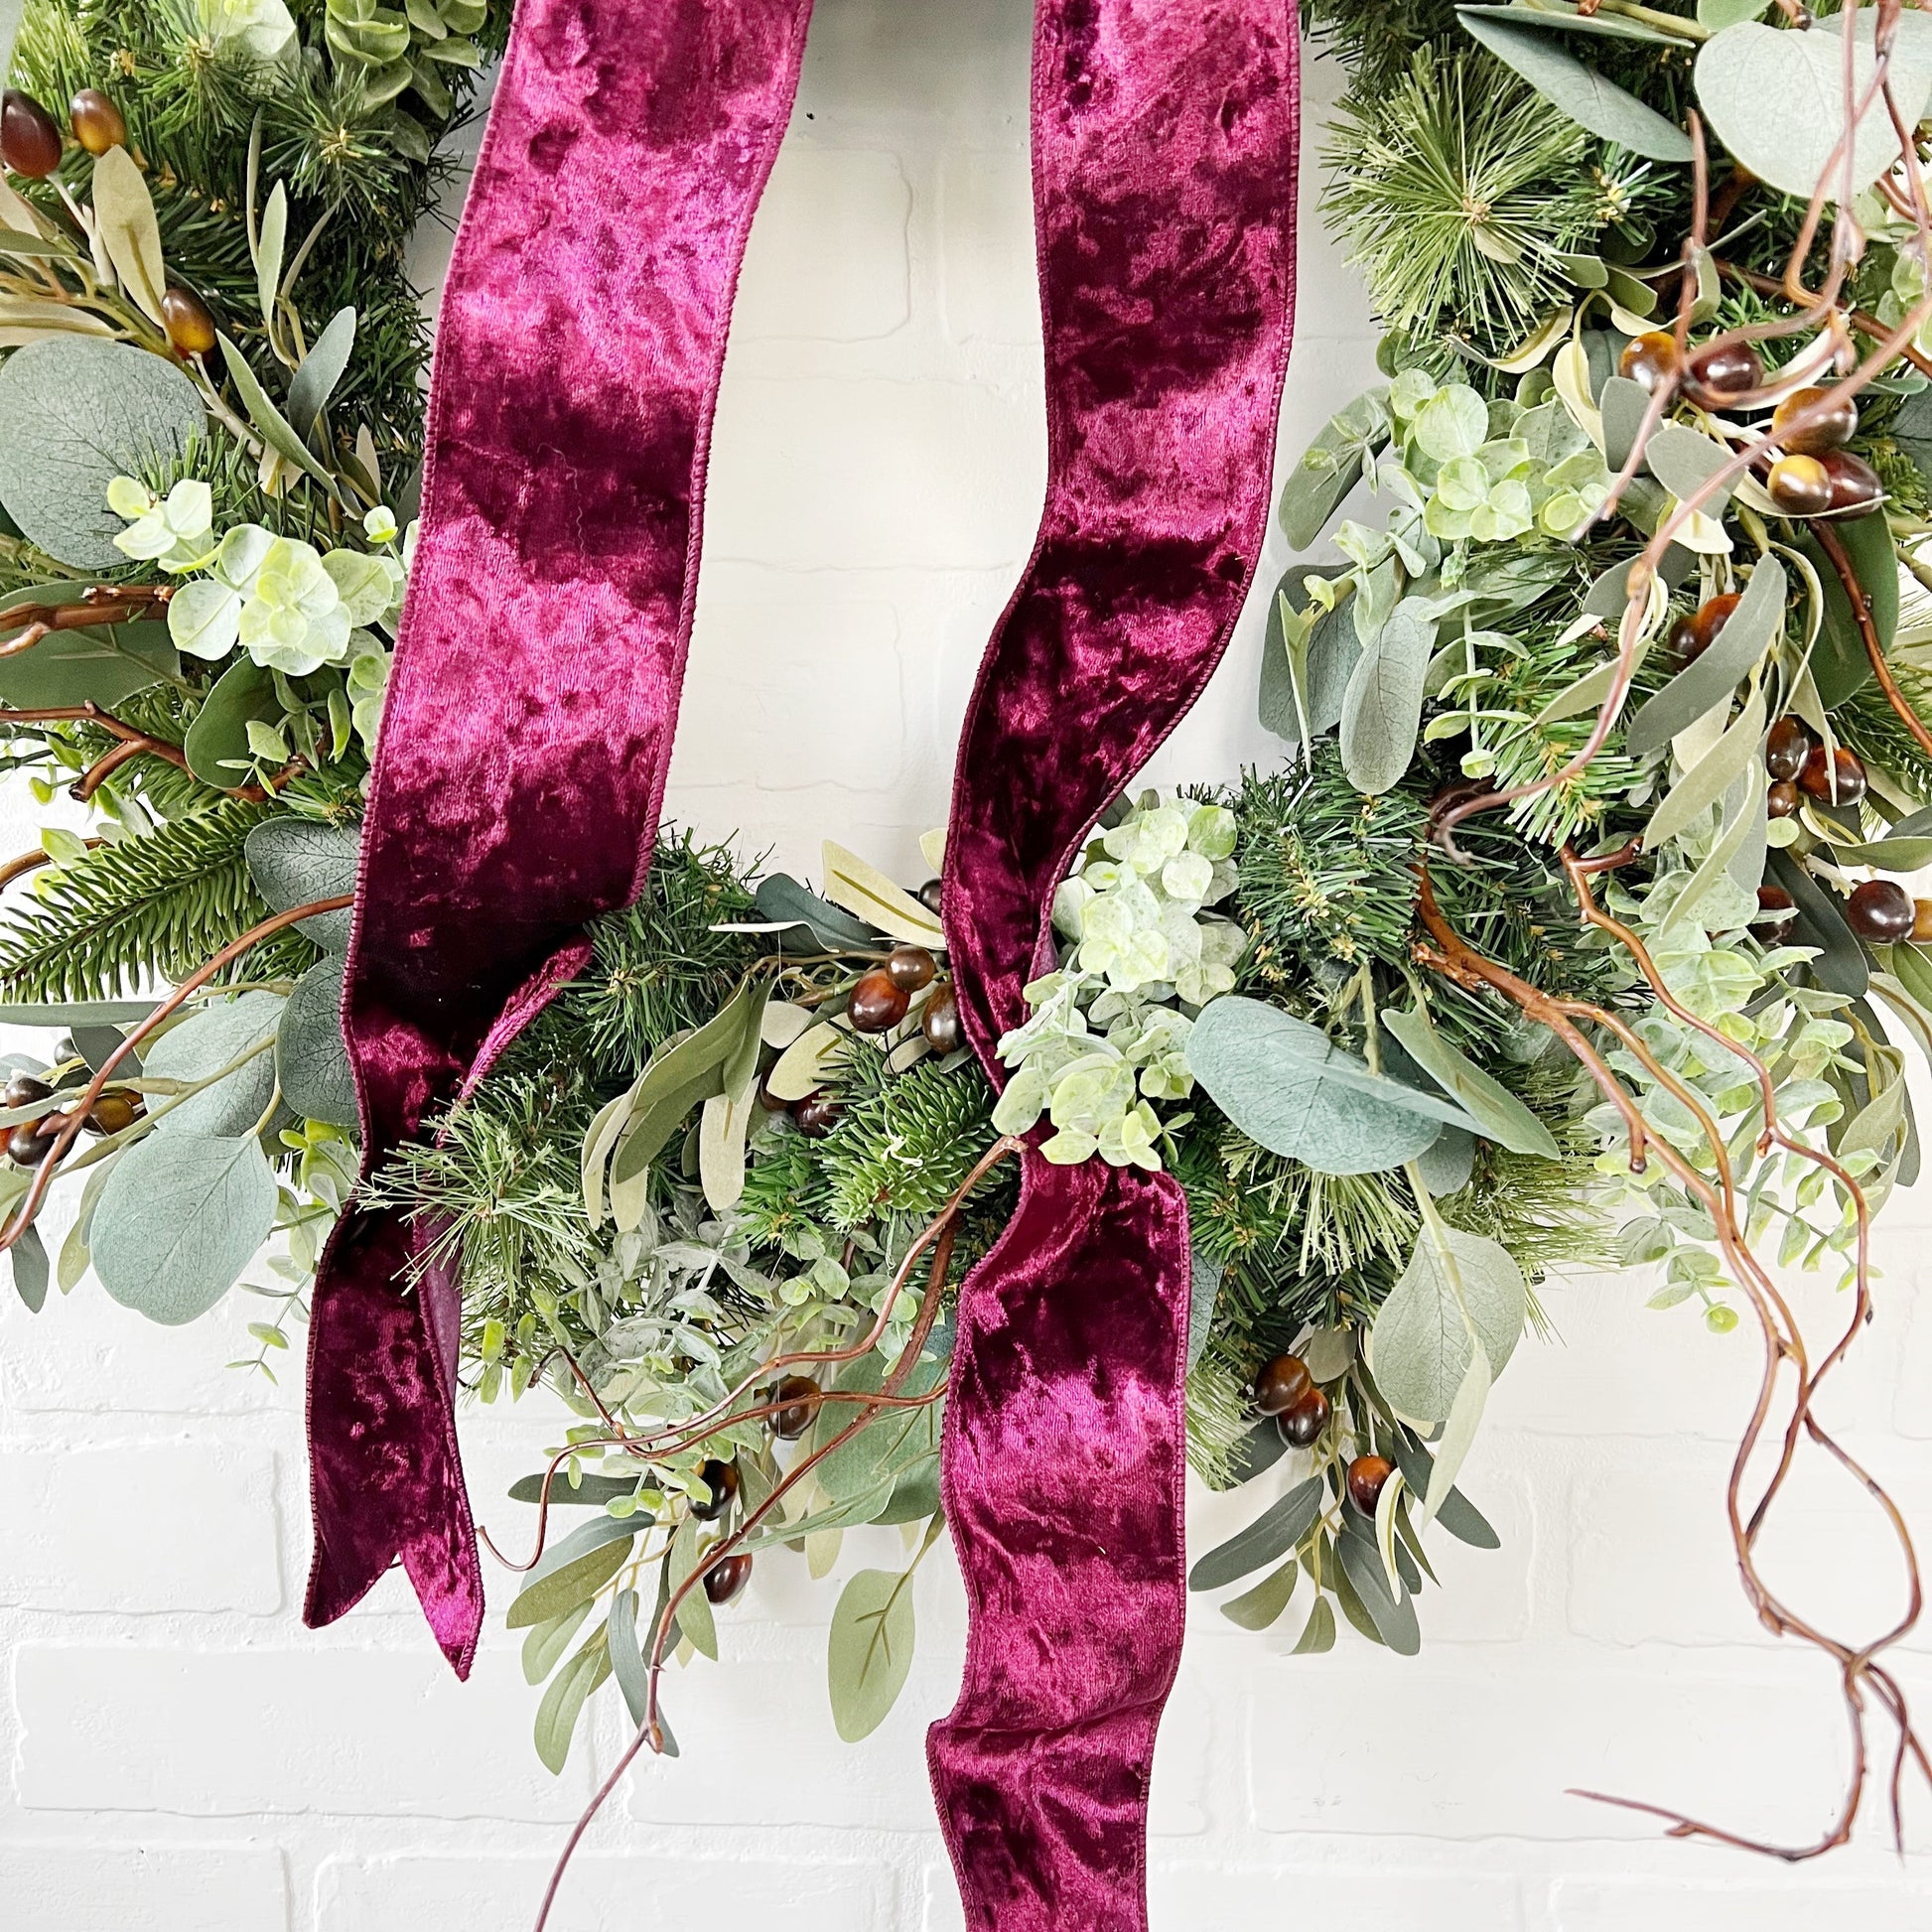 Christmas Wreath for Front Door, Burgundy Christmas Wreath - Ash & Hart 